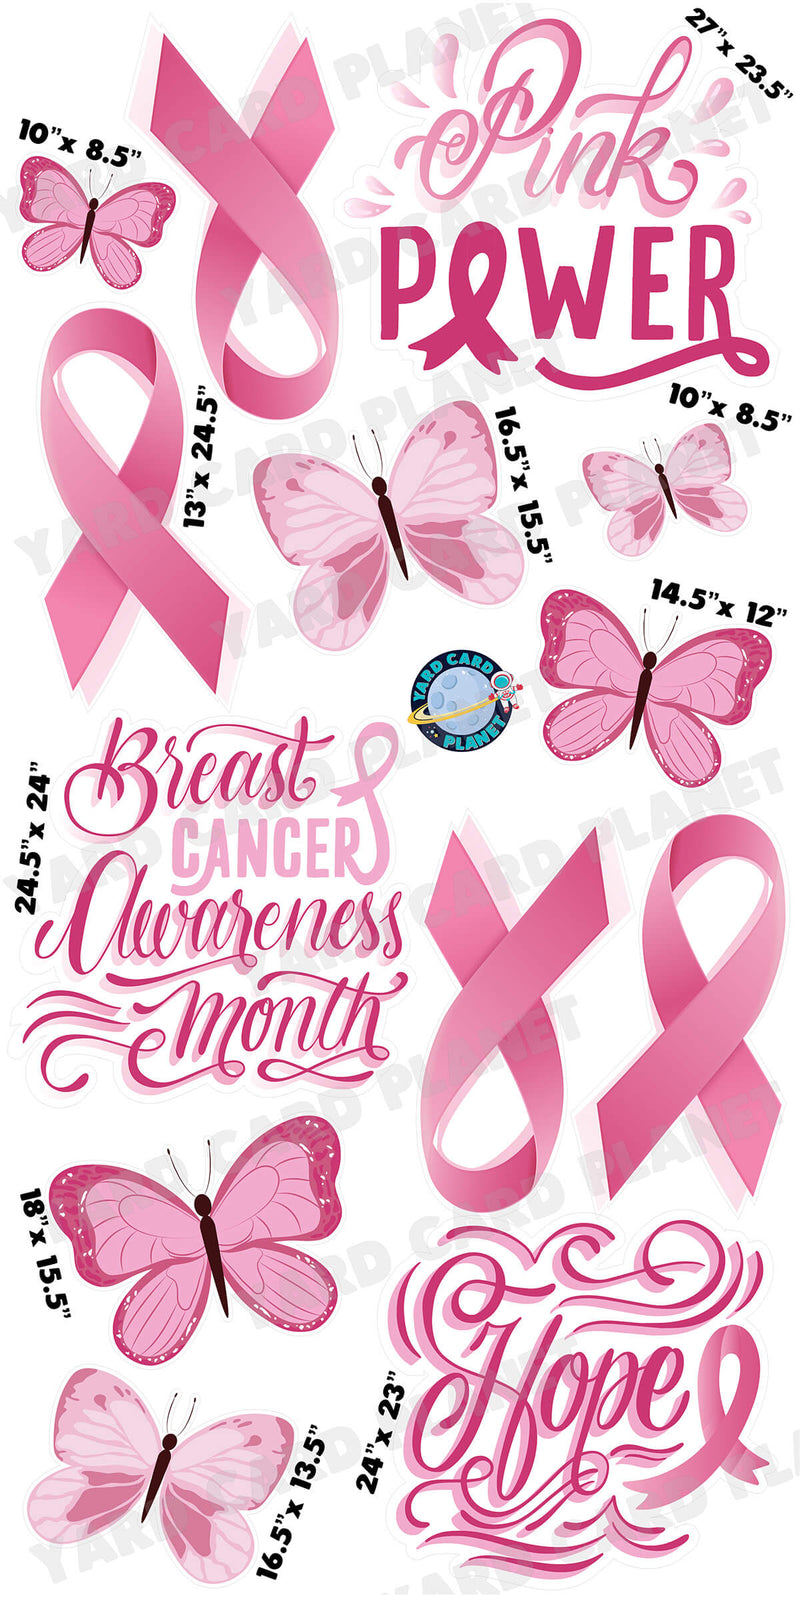 Breast Cancer Awareness Pink Power and Butterflies Yard Card Flair Set